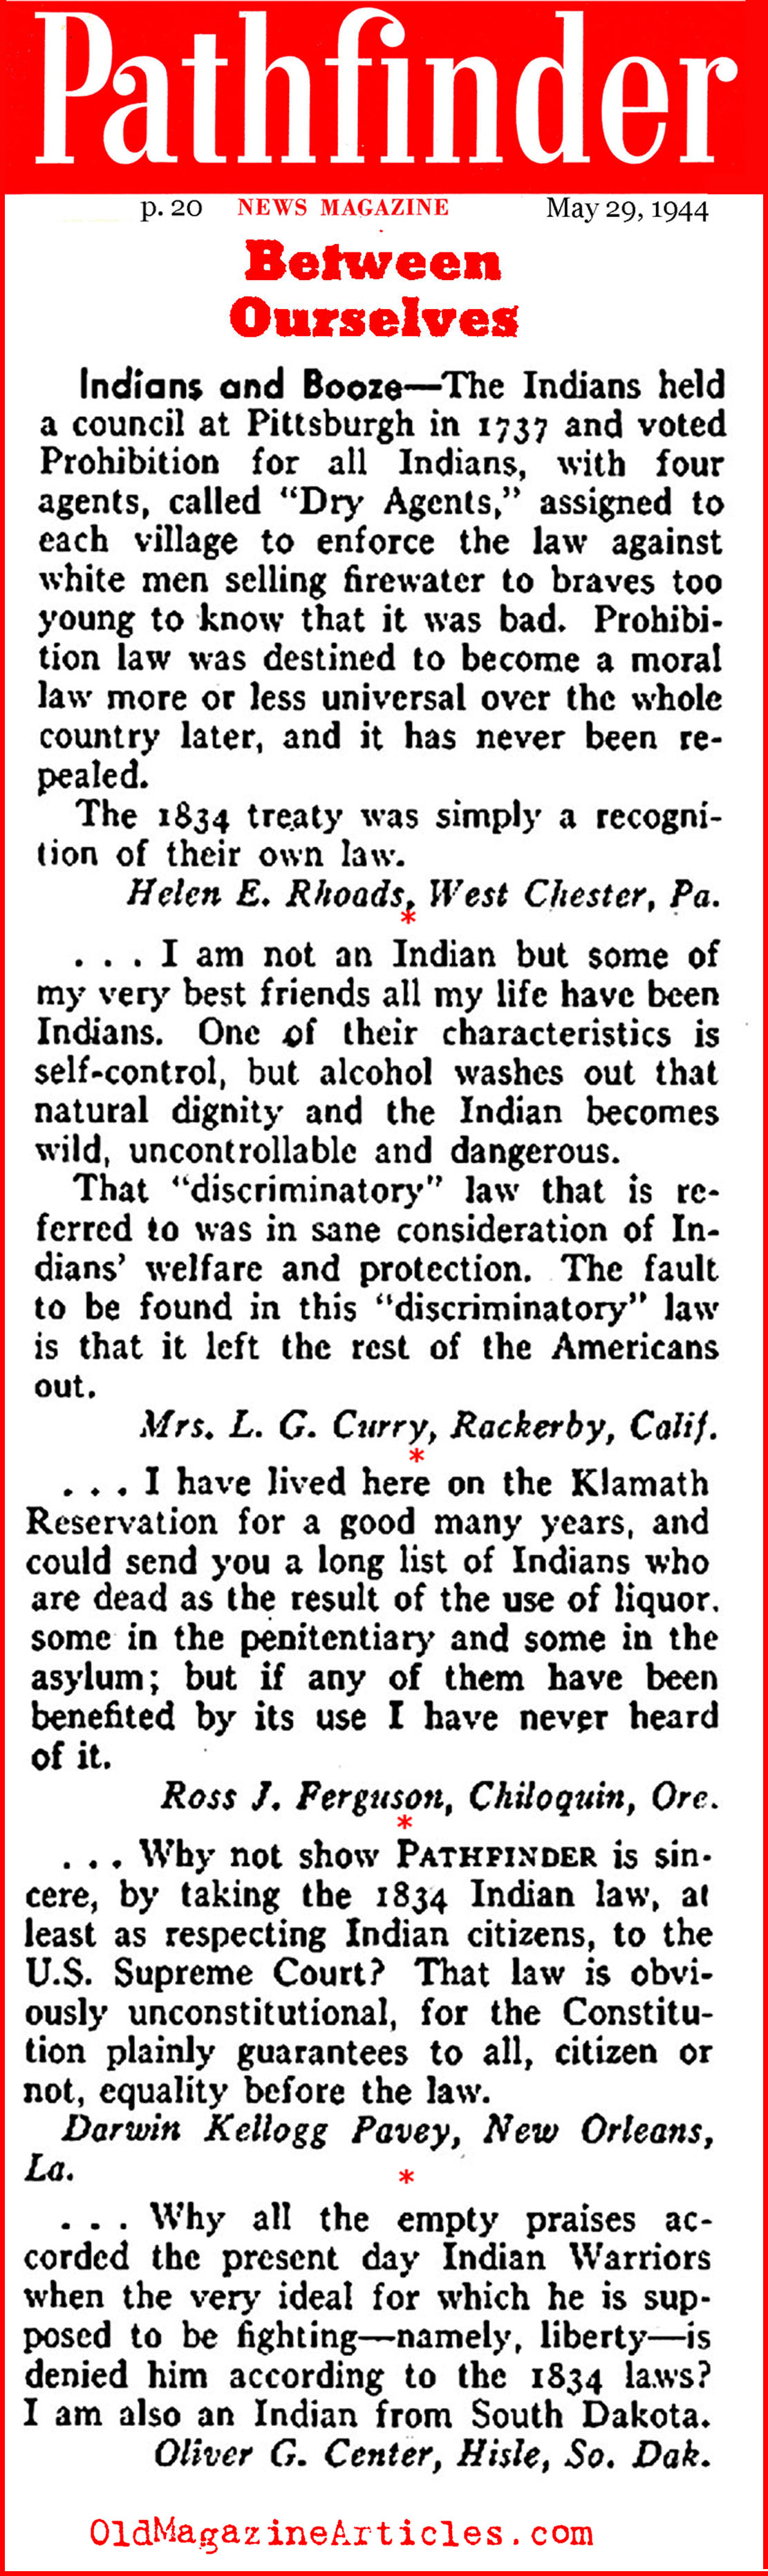 The Battle Against Alcohol Dependence (Pathfinder Magazine, 1944)